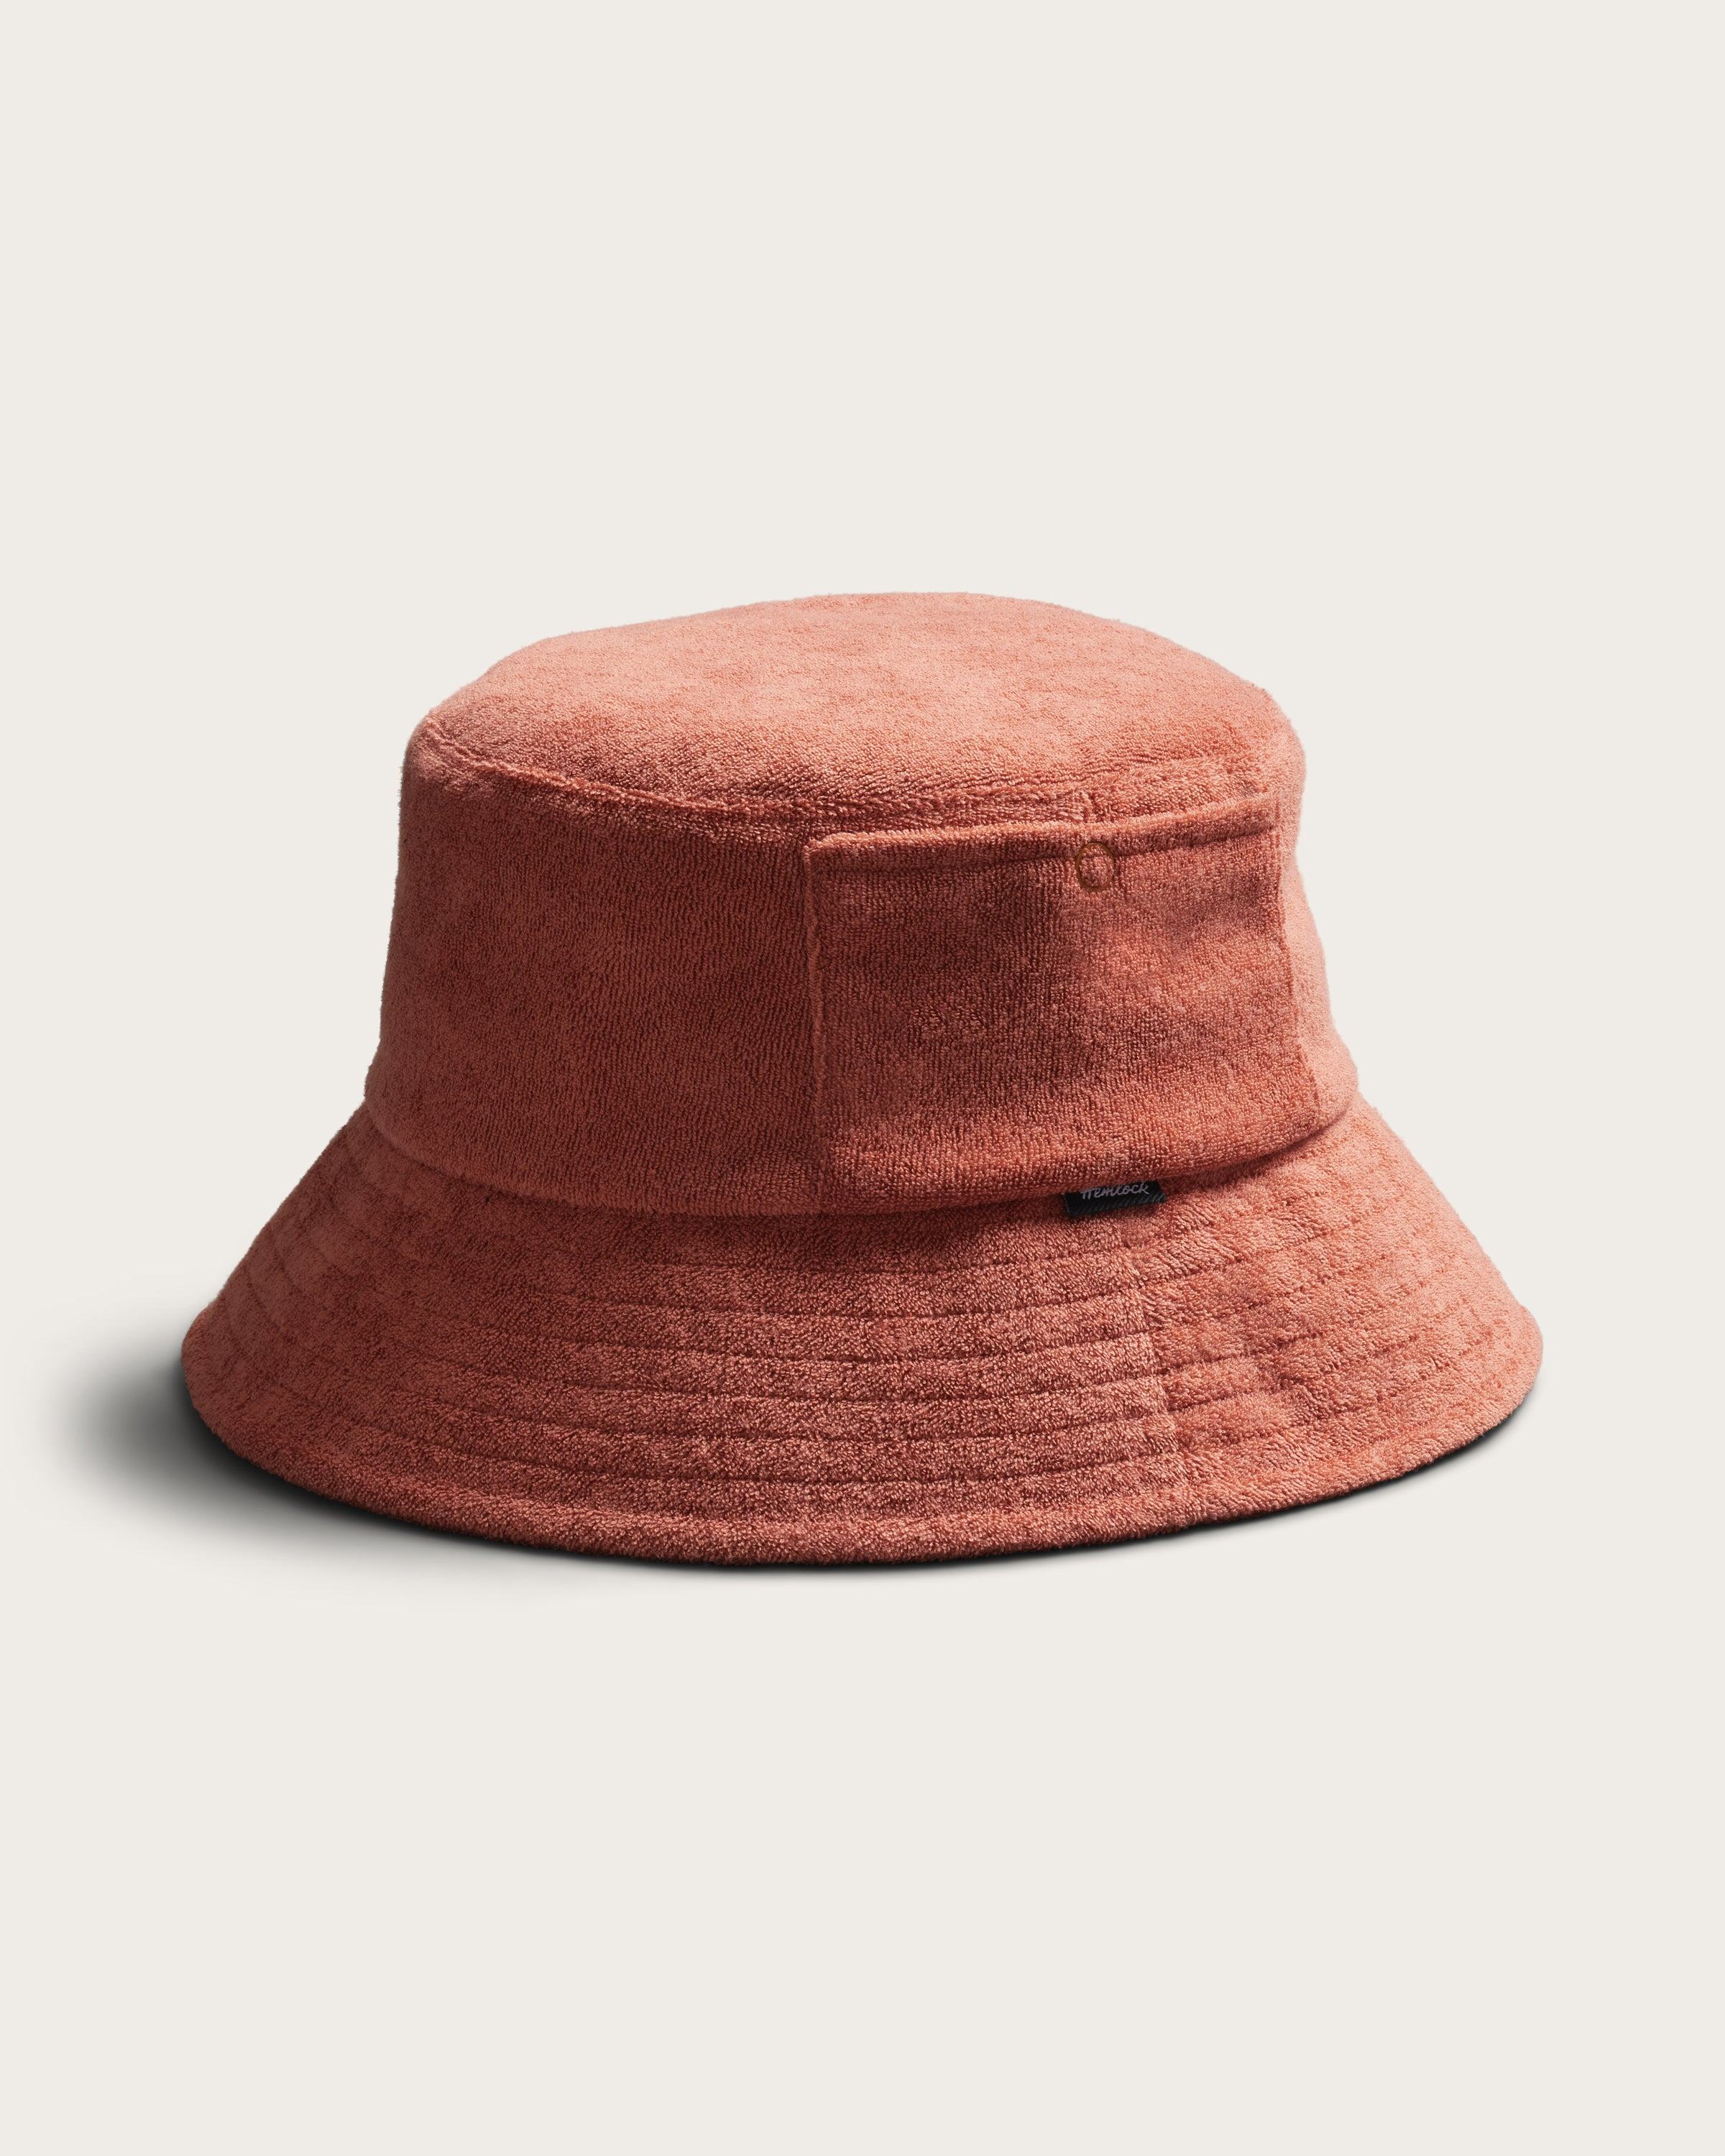 Hemlock Marina Terry Bucket Hat in Red Clay detail